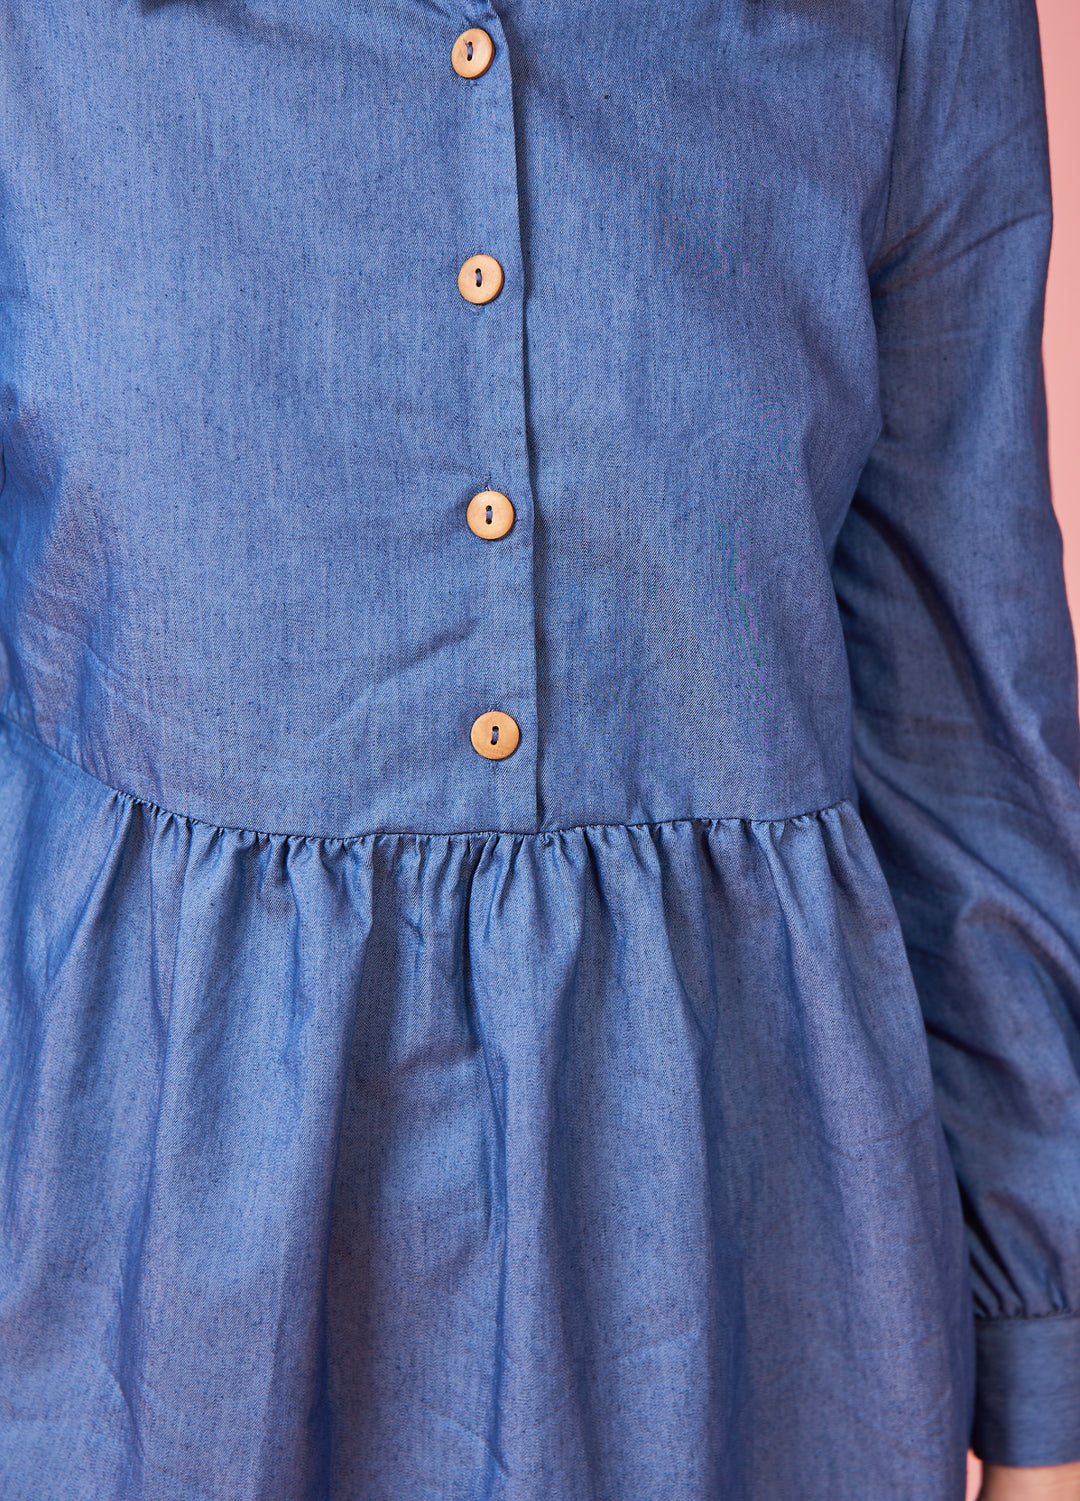 Melly throw-on mini dress - light blue chambray